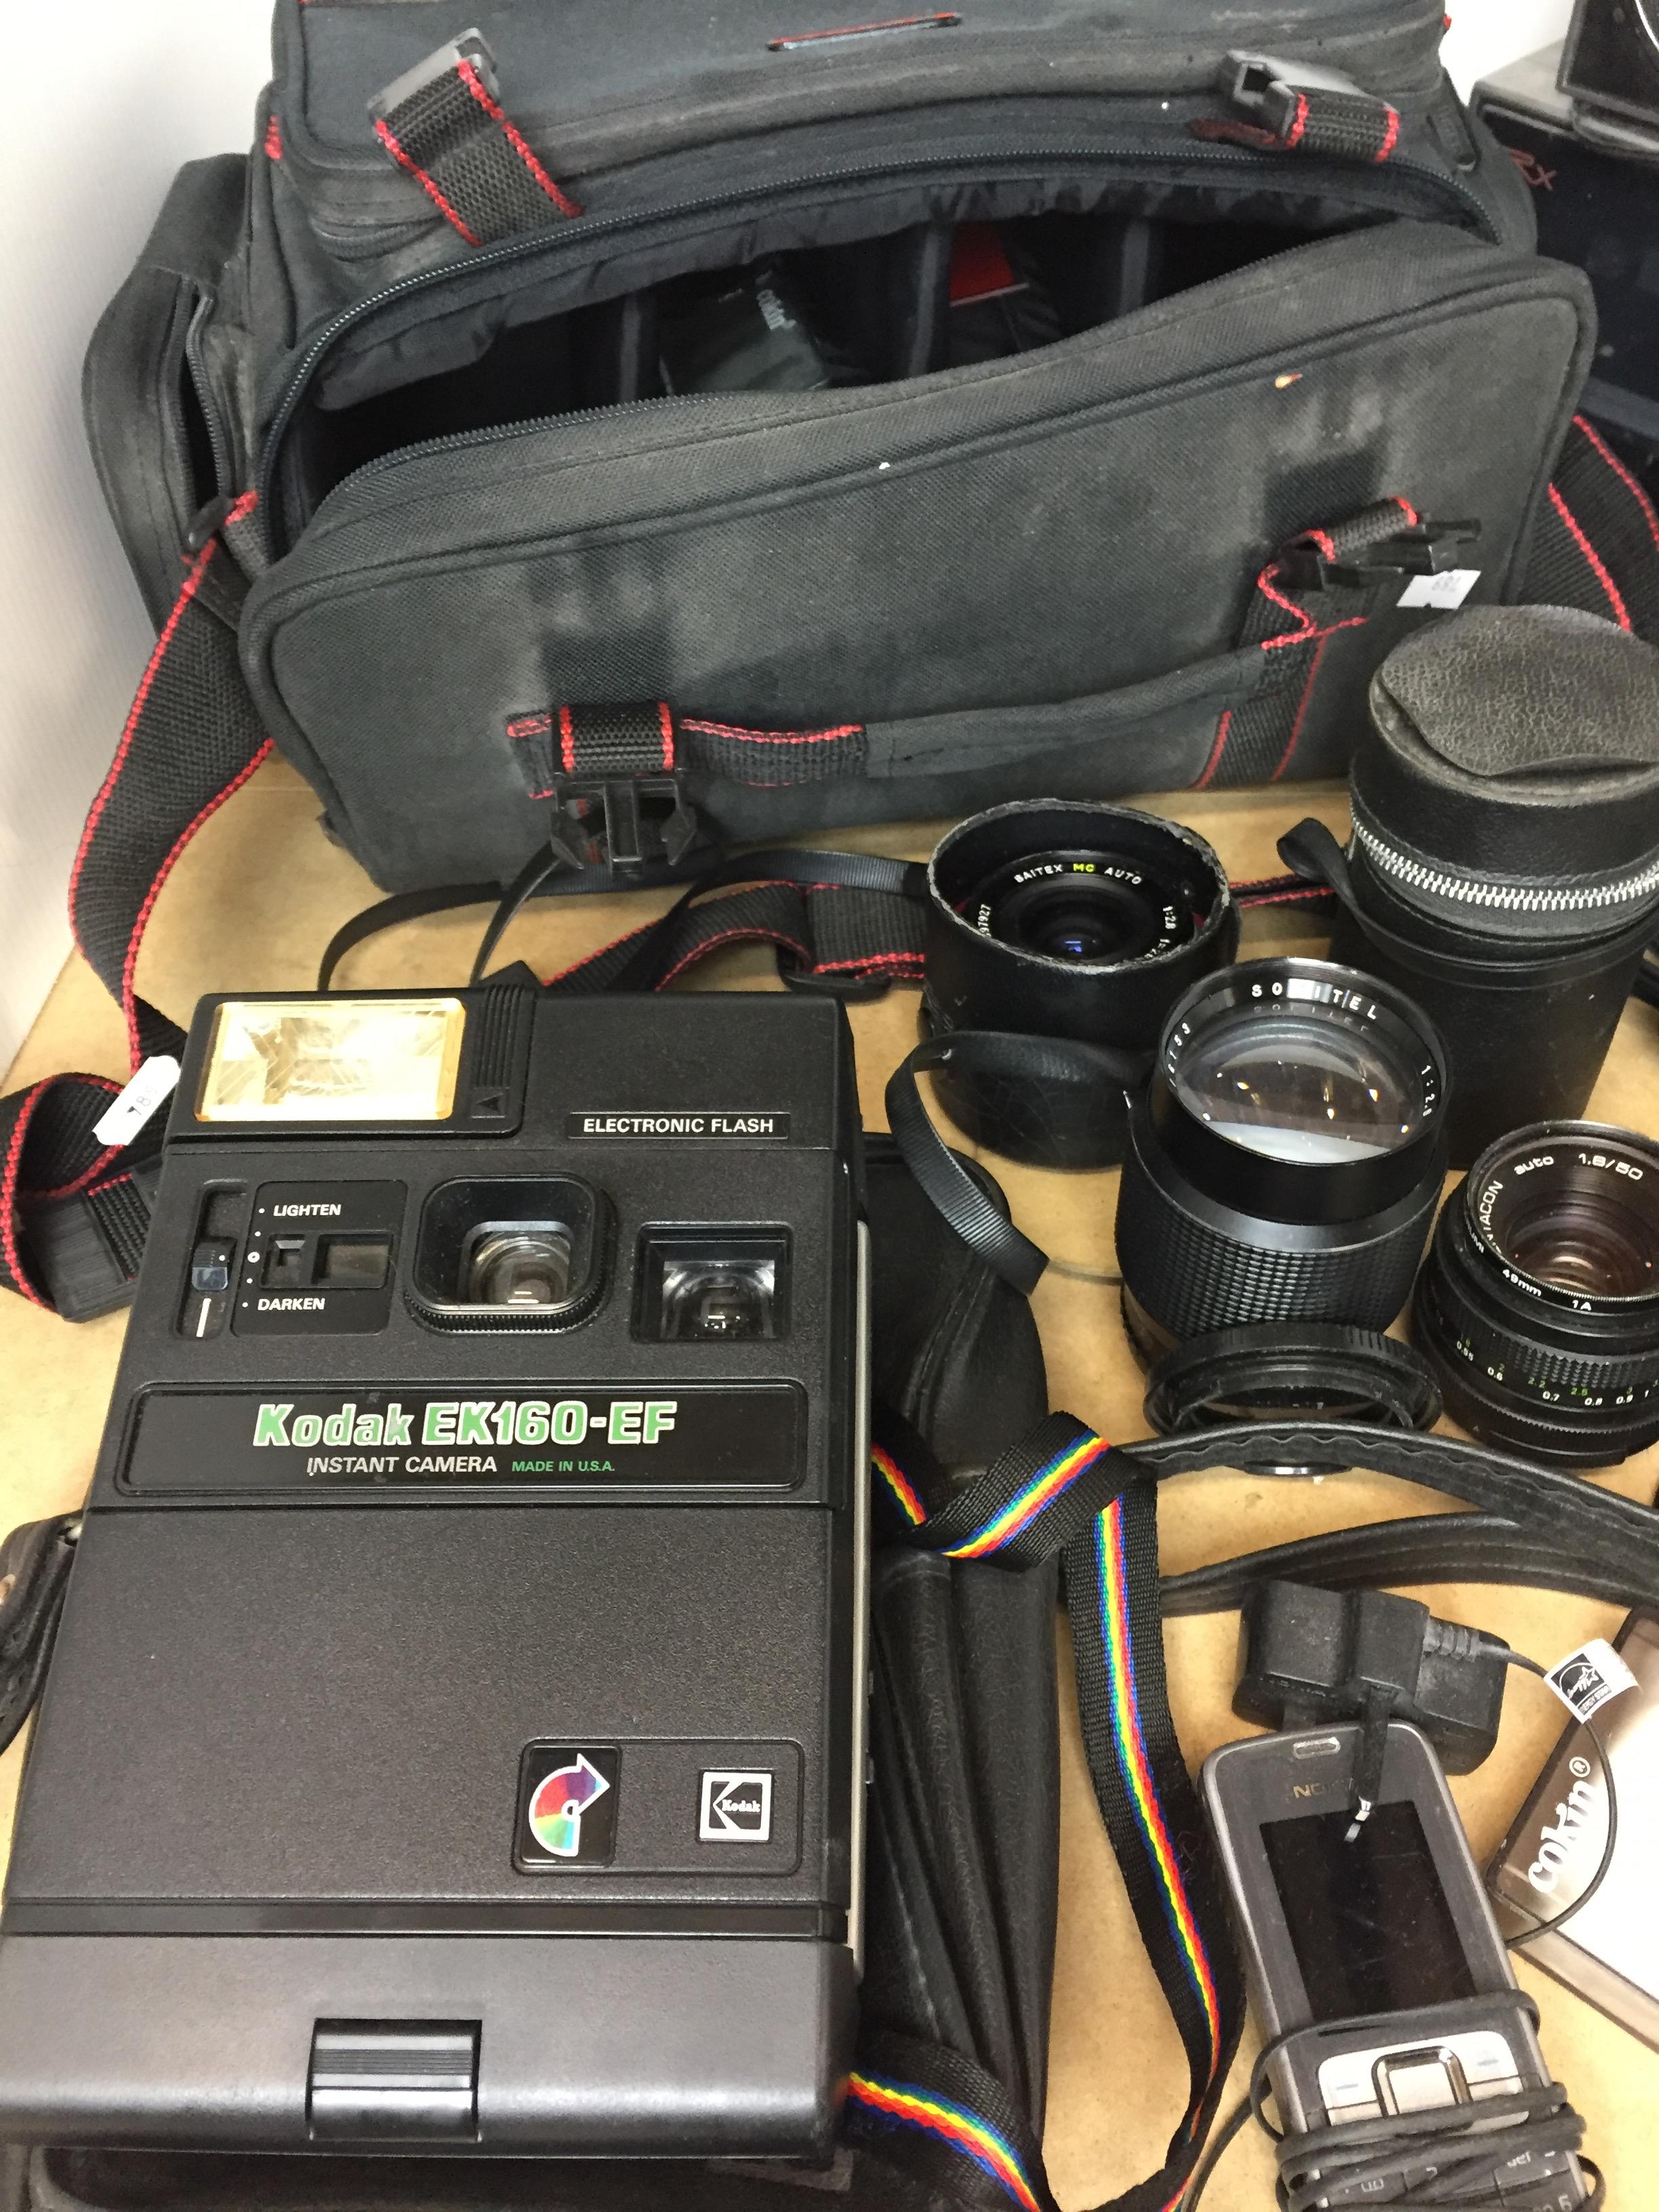 Ten plus items including three camera lenses, photographers bag, - Image 3 of 5